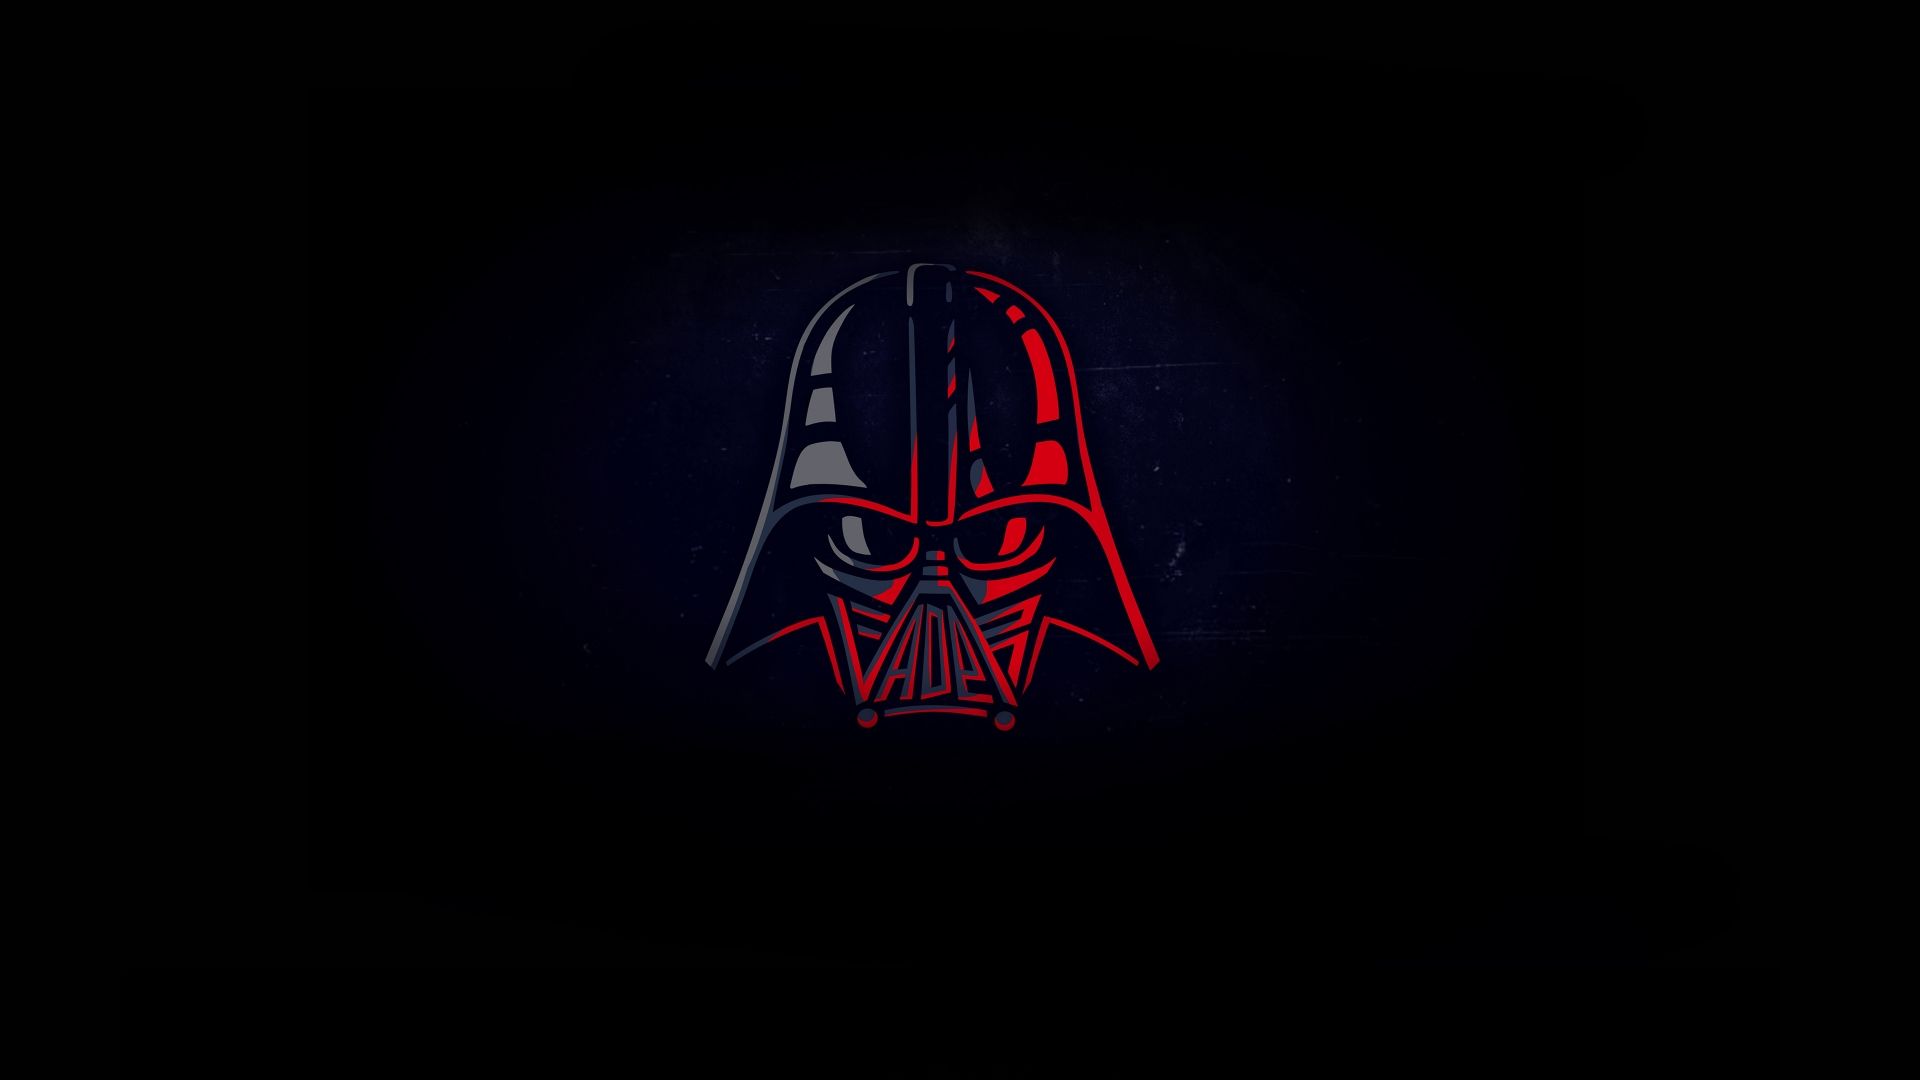 Darth Vader Minimalist Wallpaper 4k Ultra HD